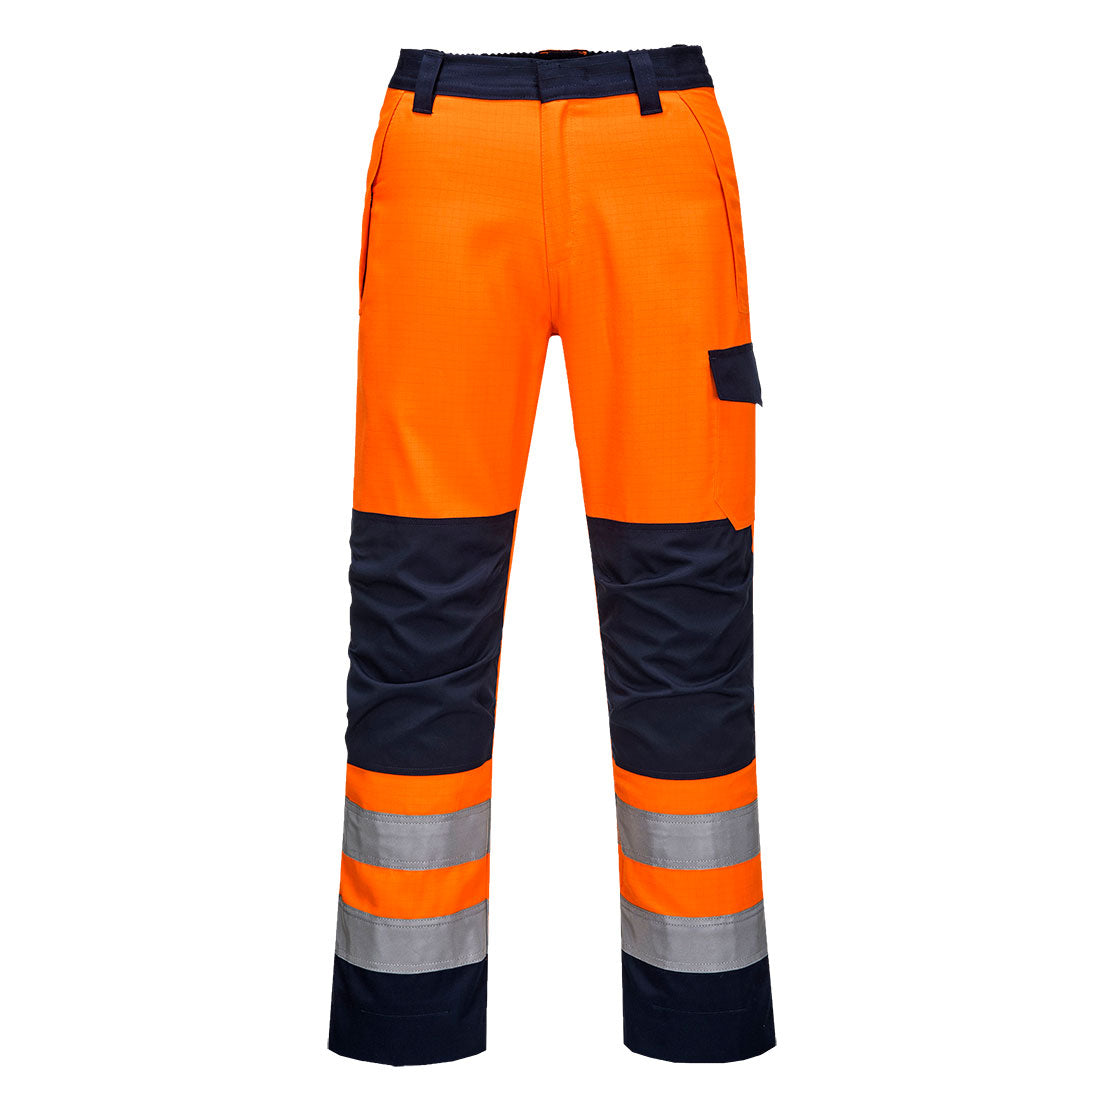 Modaflame RIS Orange/Navy Trousers  (MV36)